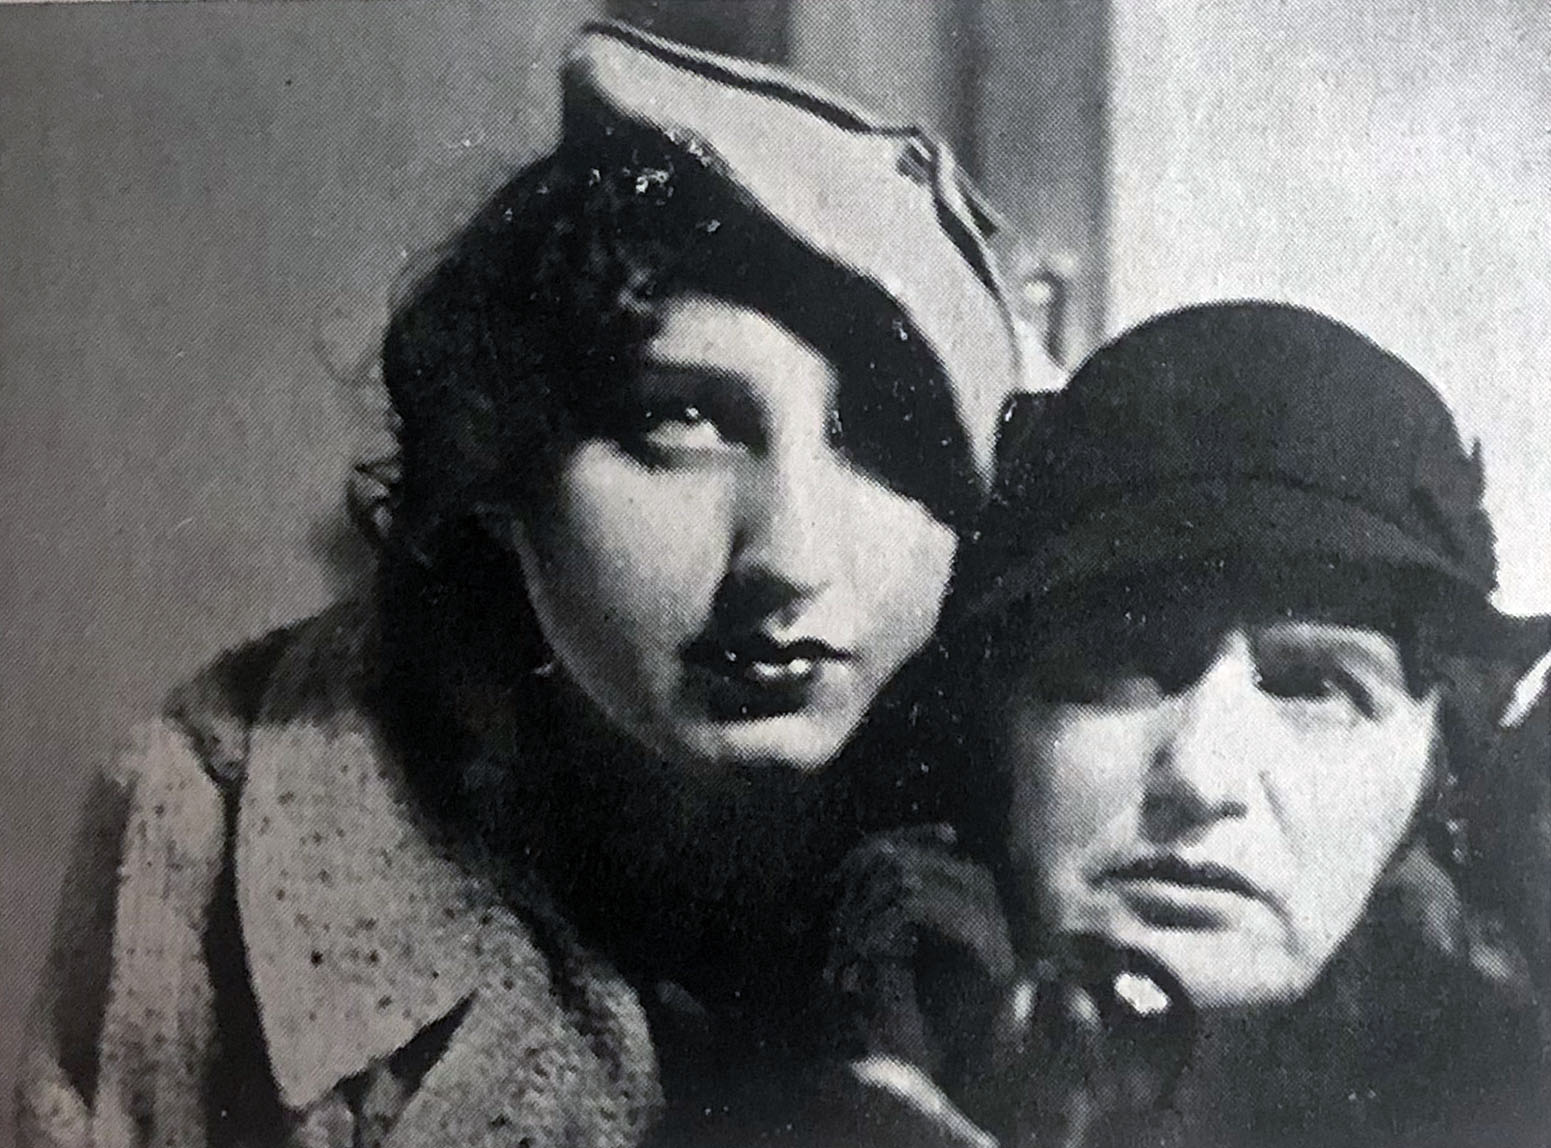 D. Paolella, Cinema sperimentale, 1937